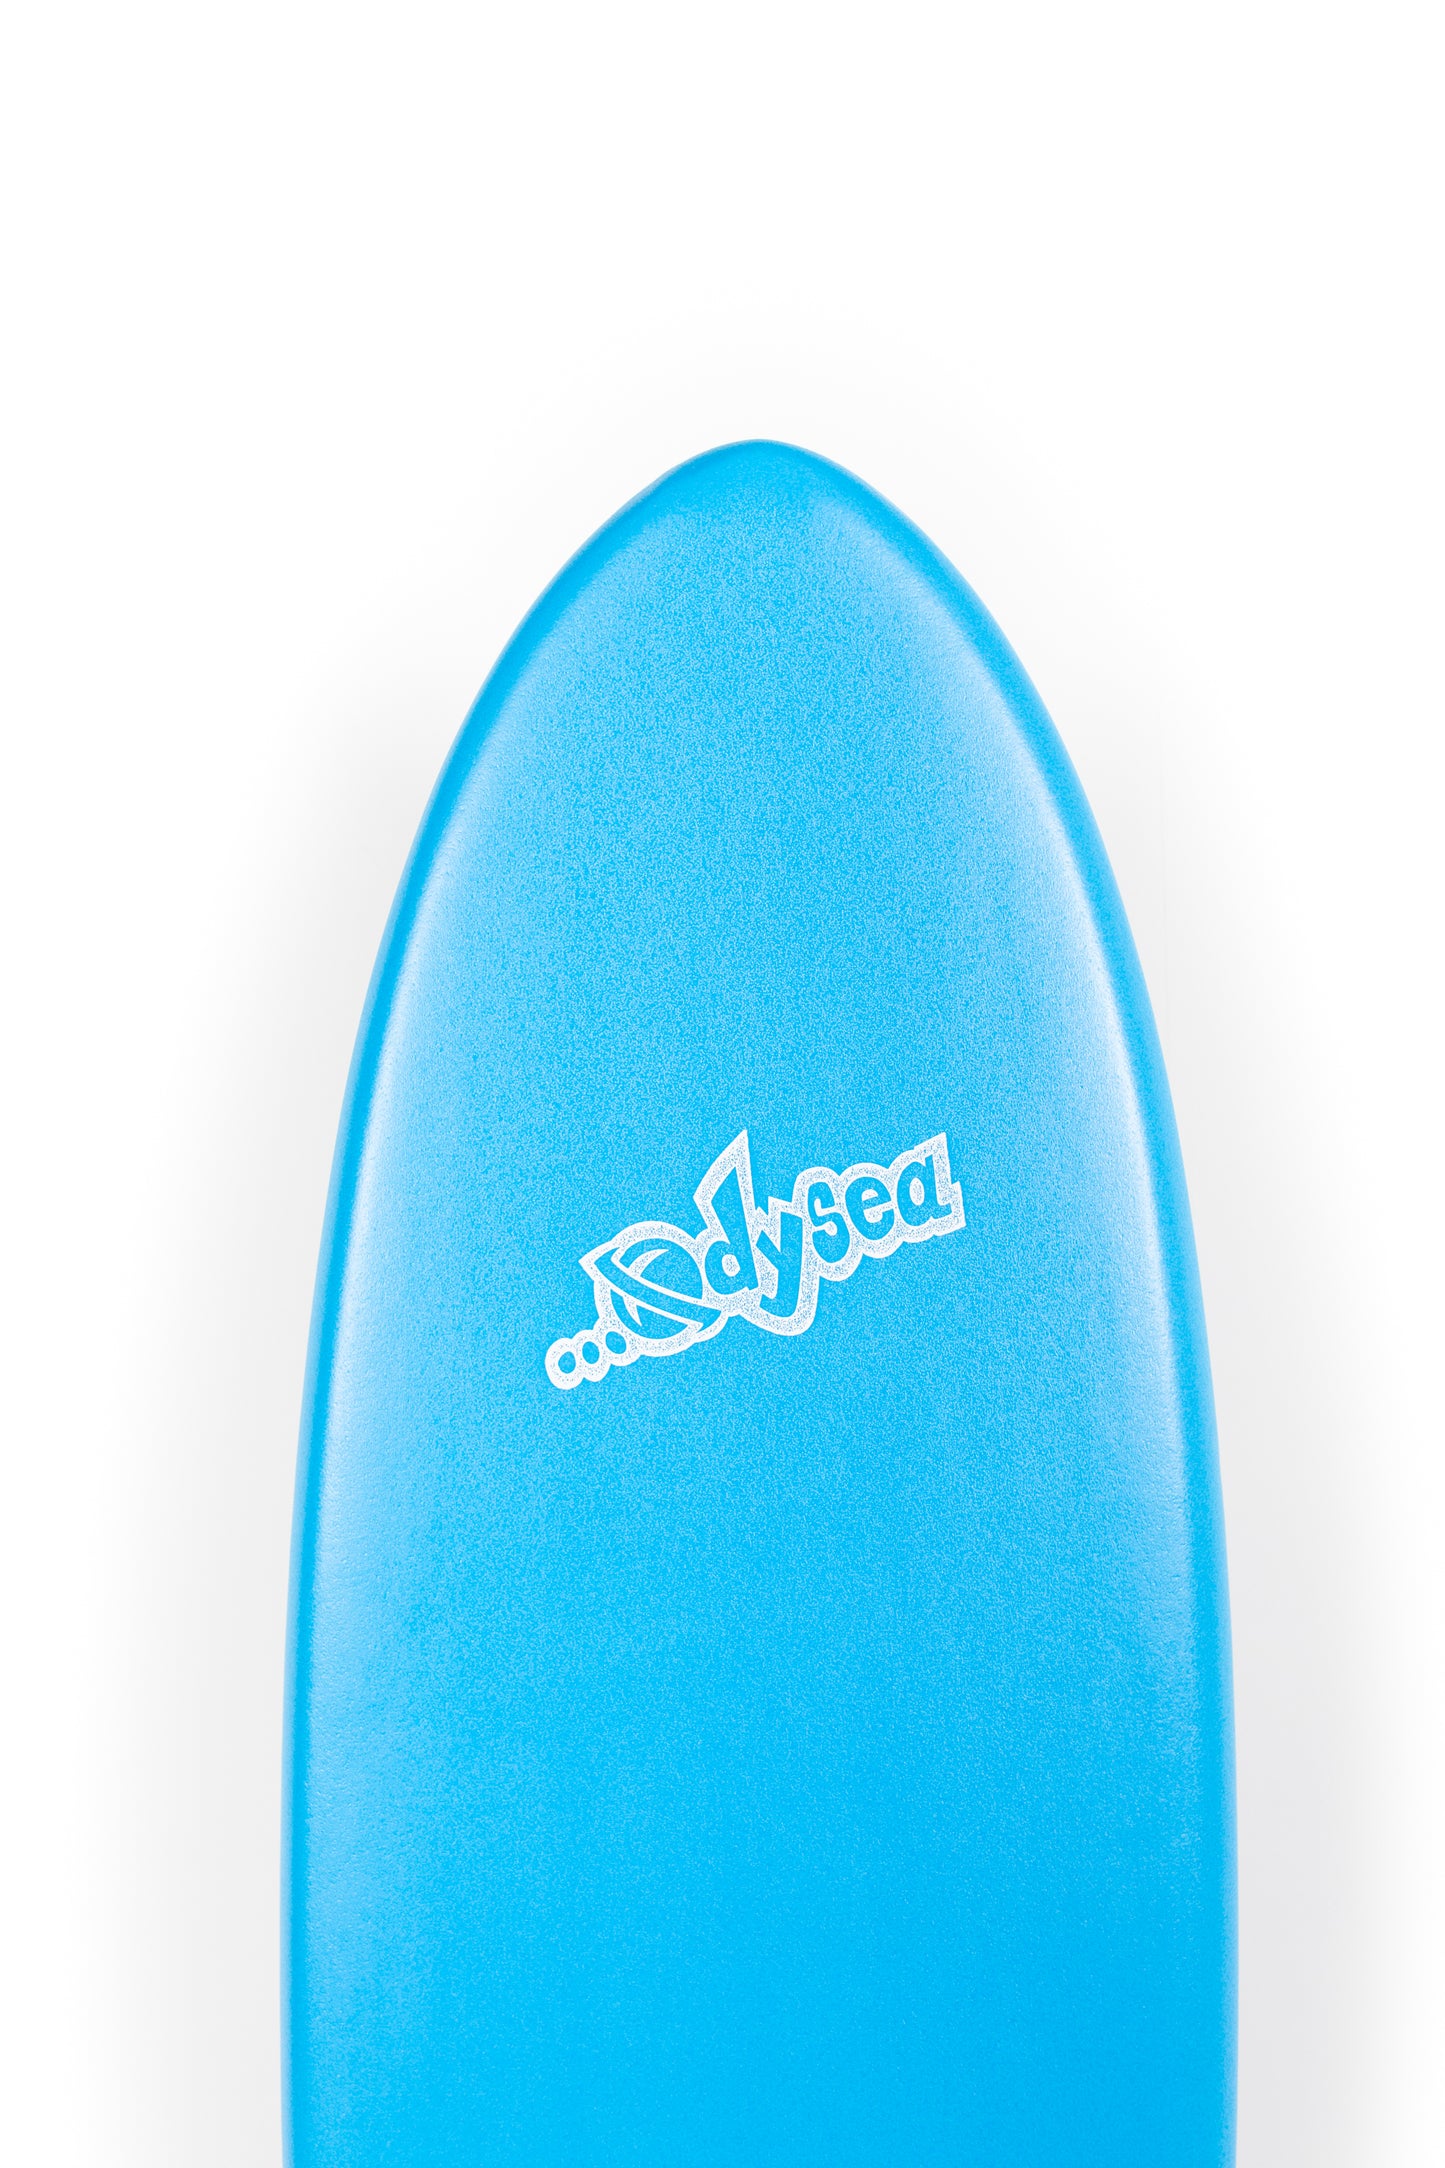 
                  
                    Pukas-Surf-Shop-Catch-Surf-Surfboards-Odisea-Round-Nose-Fish-Blue
                  
                